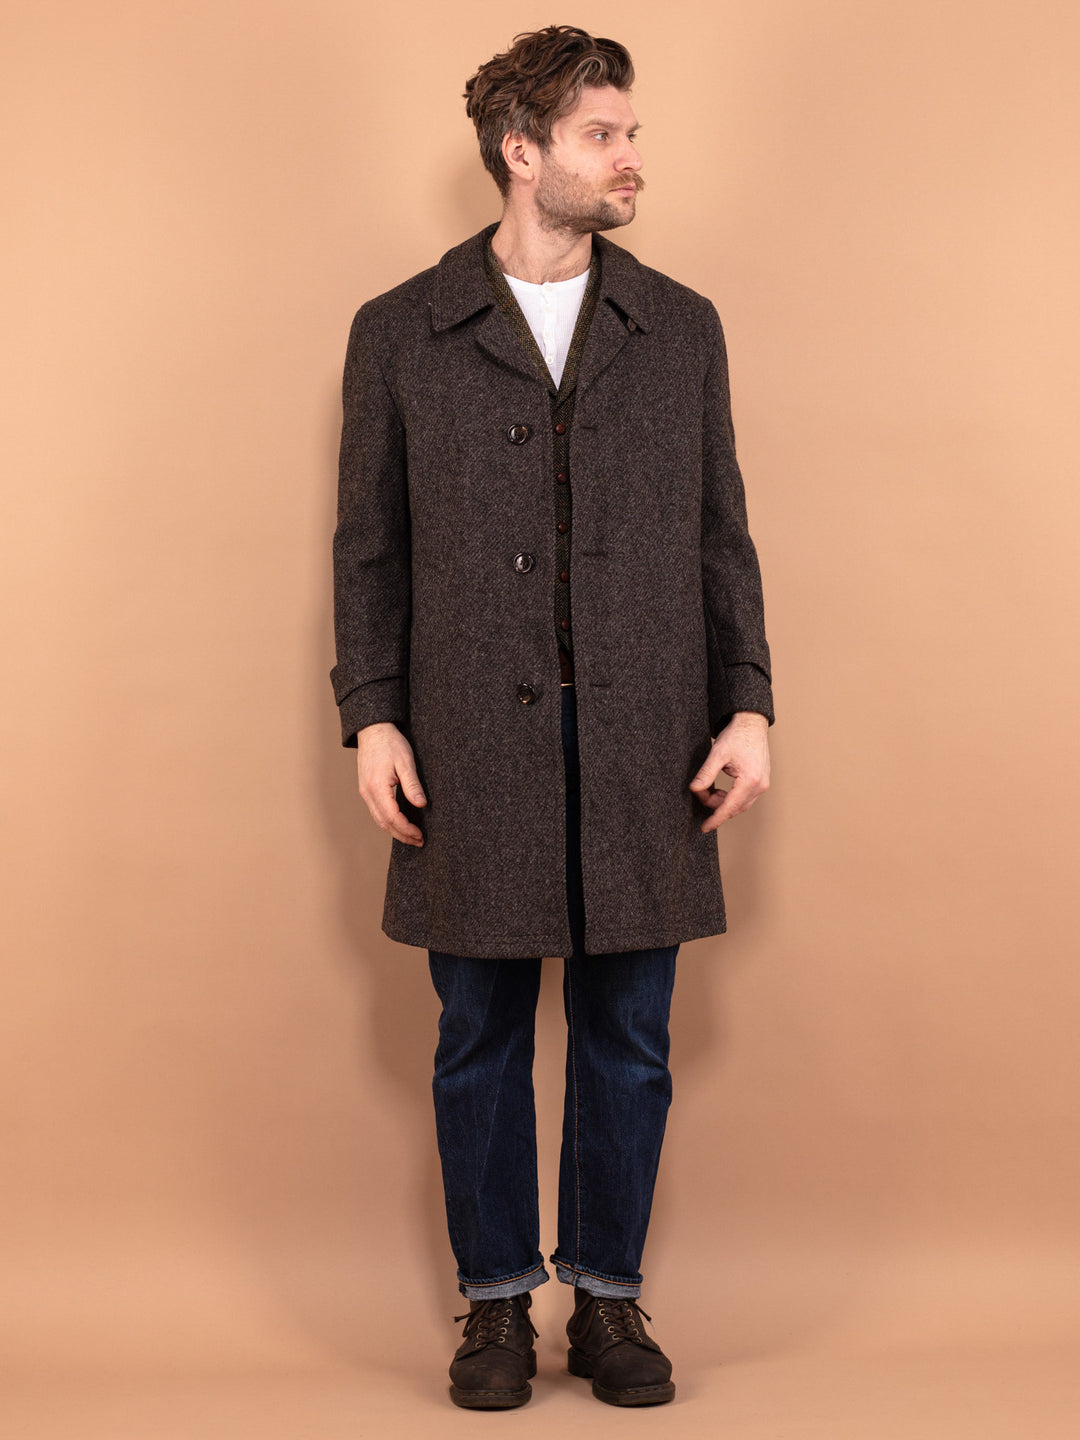 70s Kynoch Wool Coat, Size Medium, Brown Wool Overcoat, Retro Wool Coat, Vintage Men Clothing, Classic Long Coat, Made in Scotland